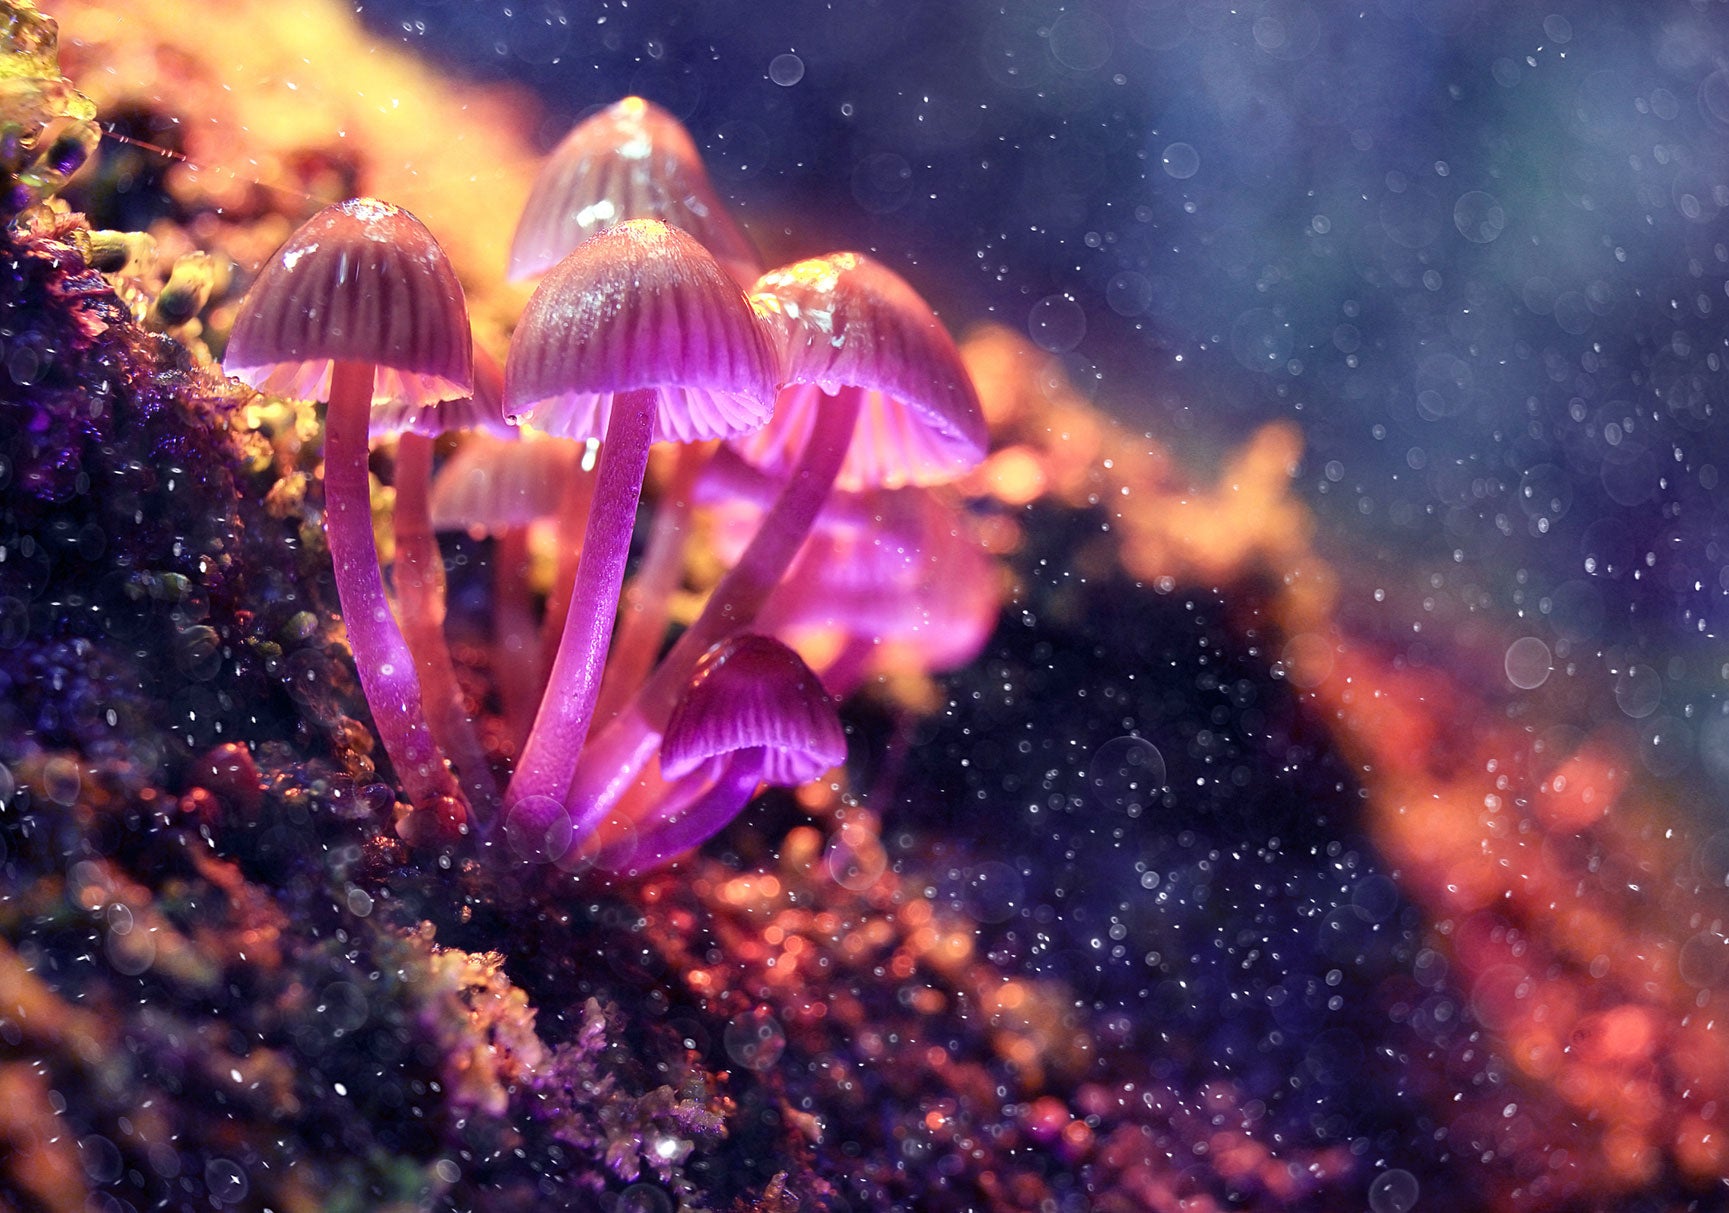 small poisonous mushrooms toadstool group psilocybin